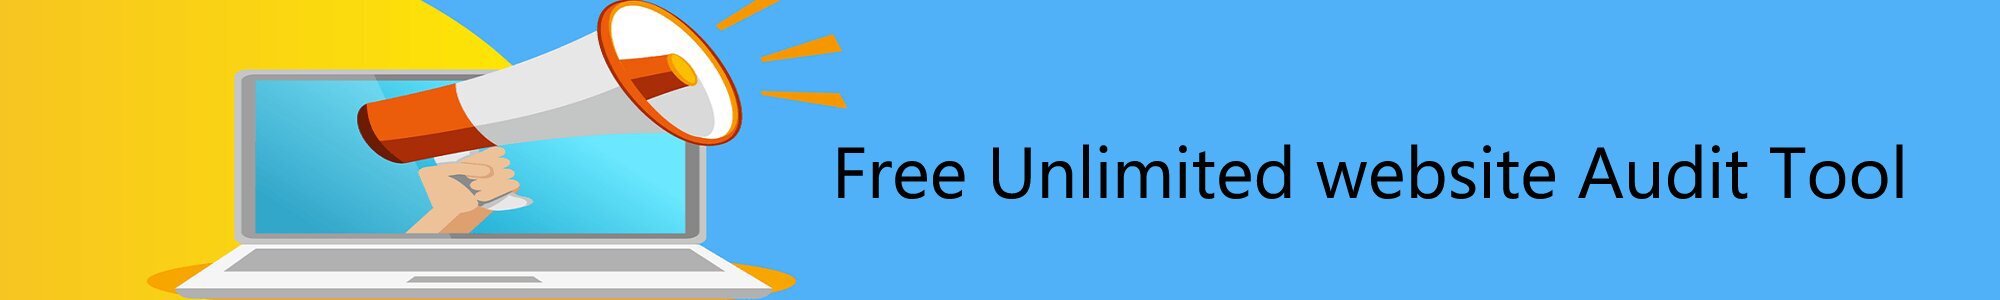 Unlimited free website Audit tool